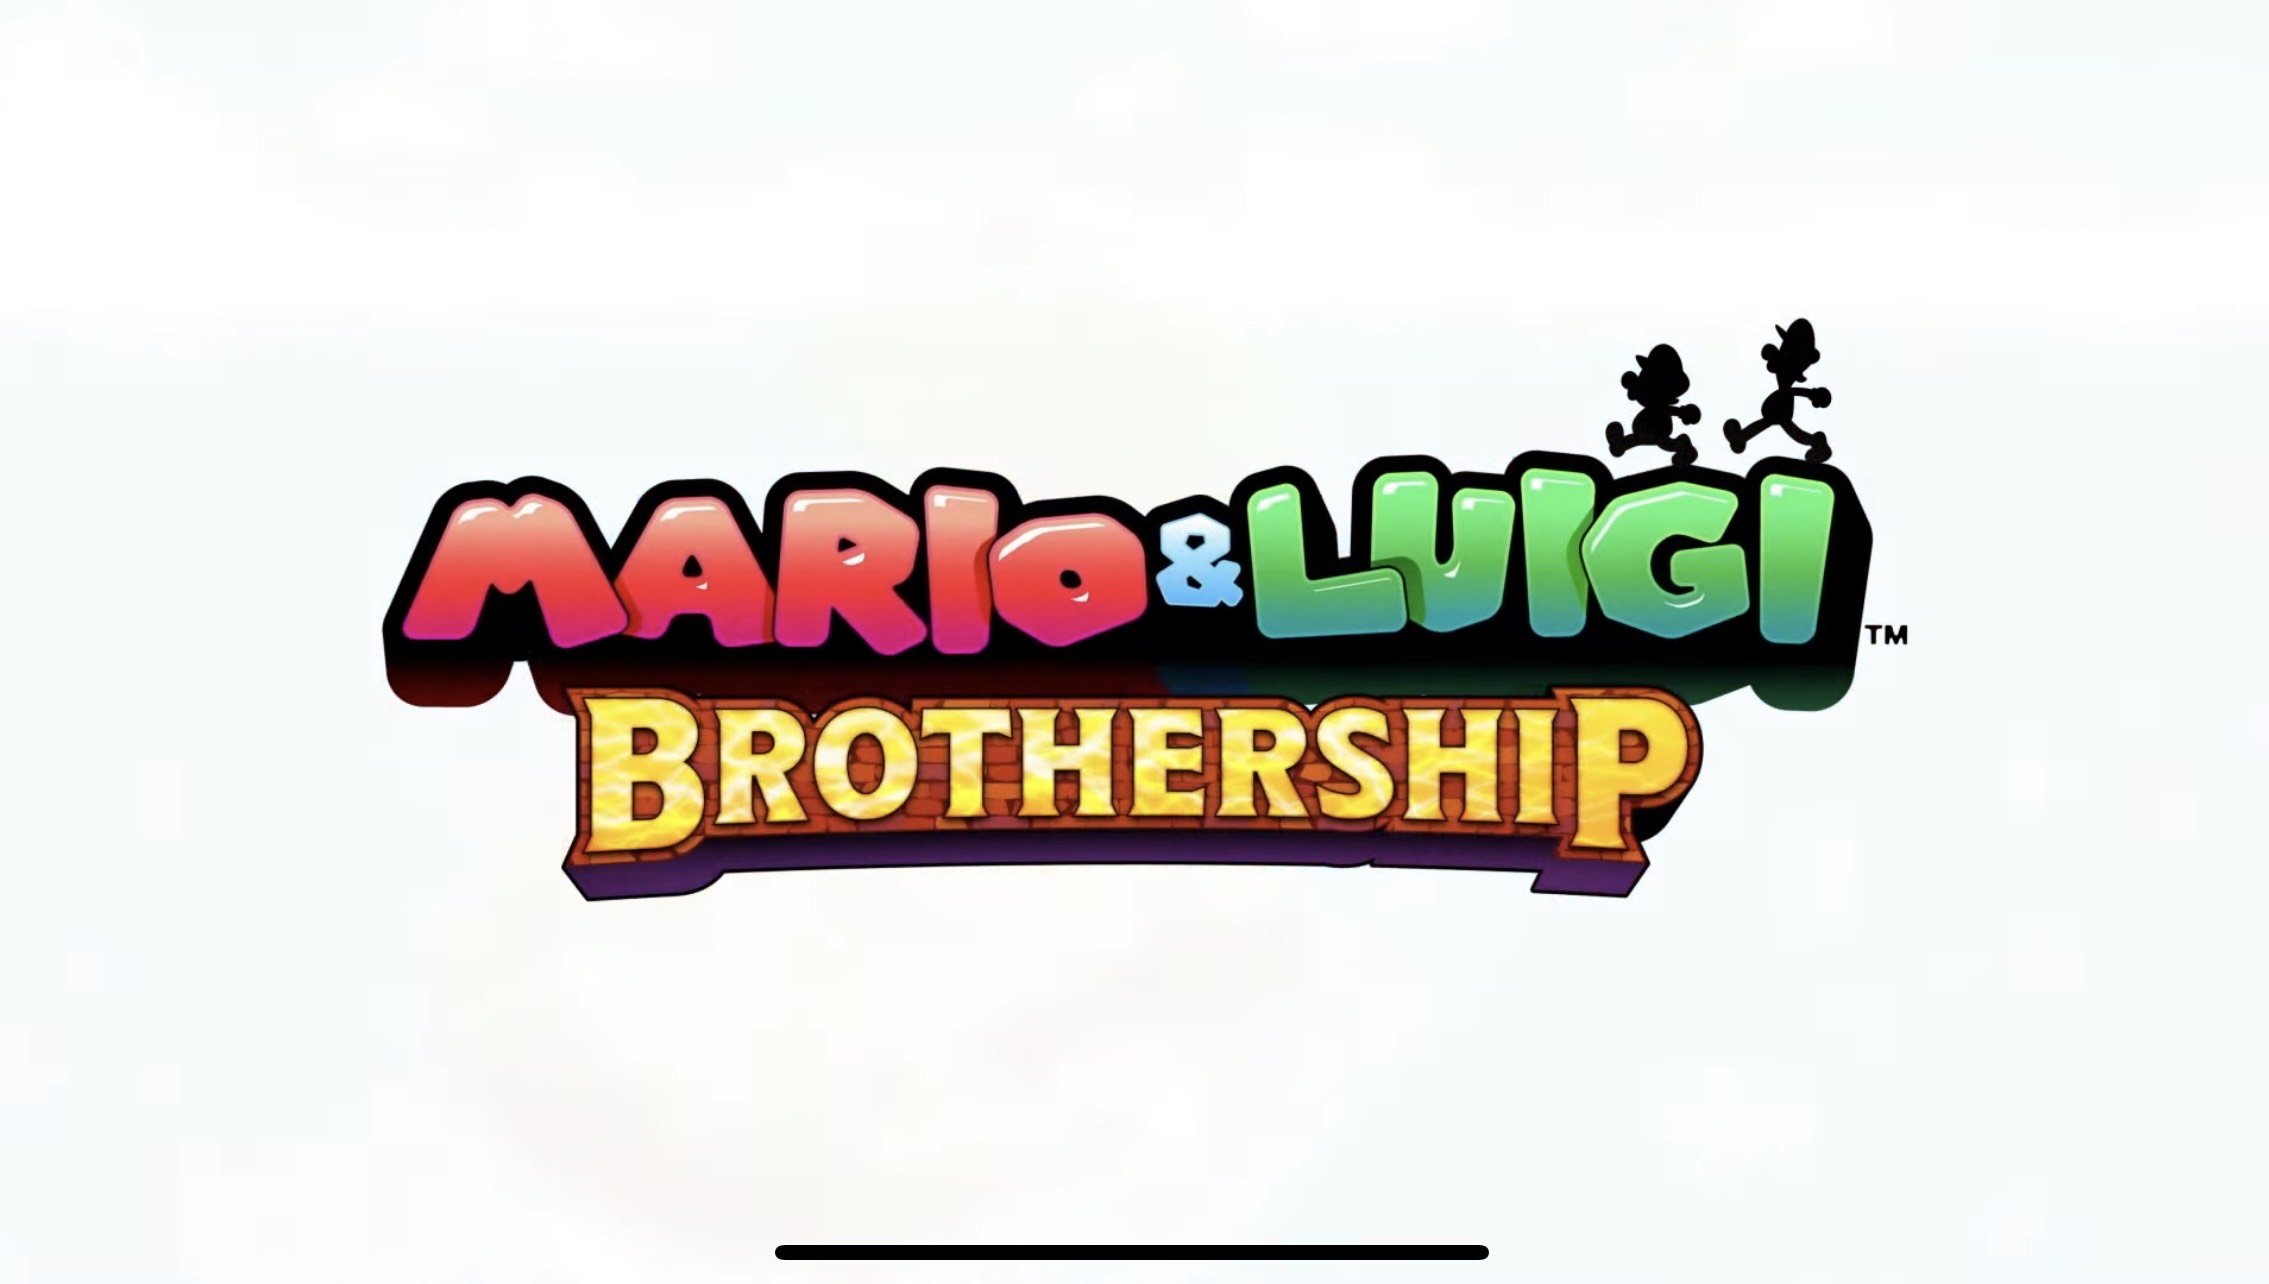 Mario & Luigi: Brothership logo.